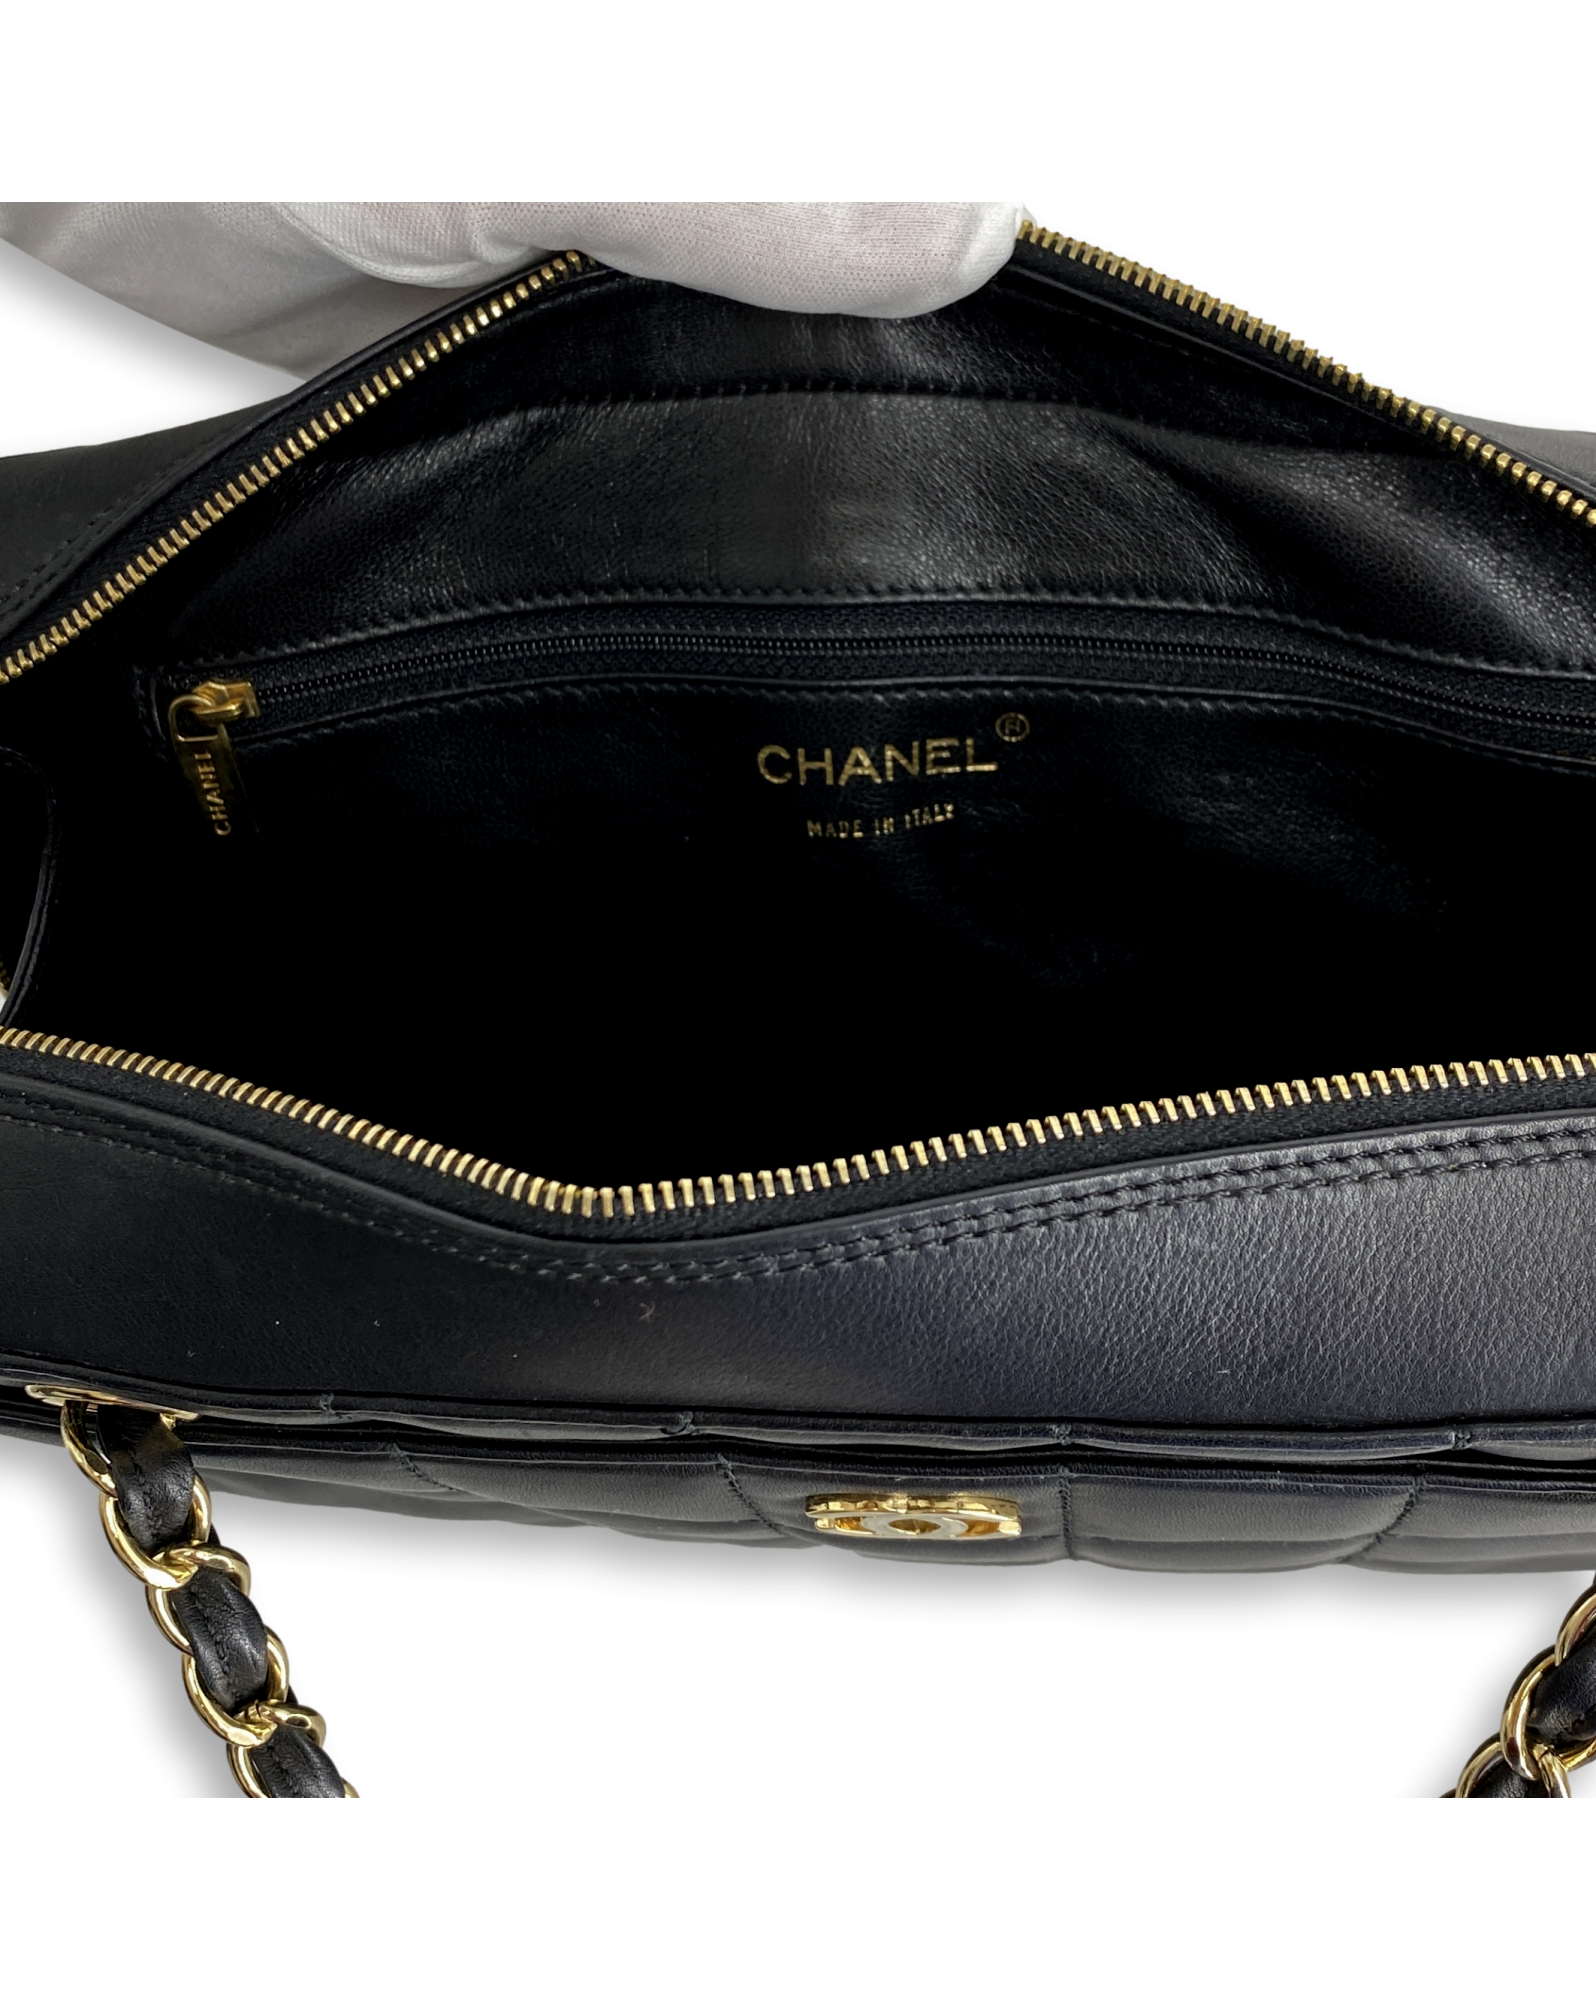 Chanel Camera Bag Chocolate Bar